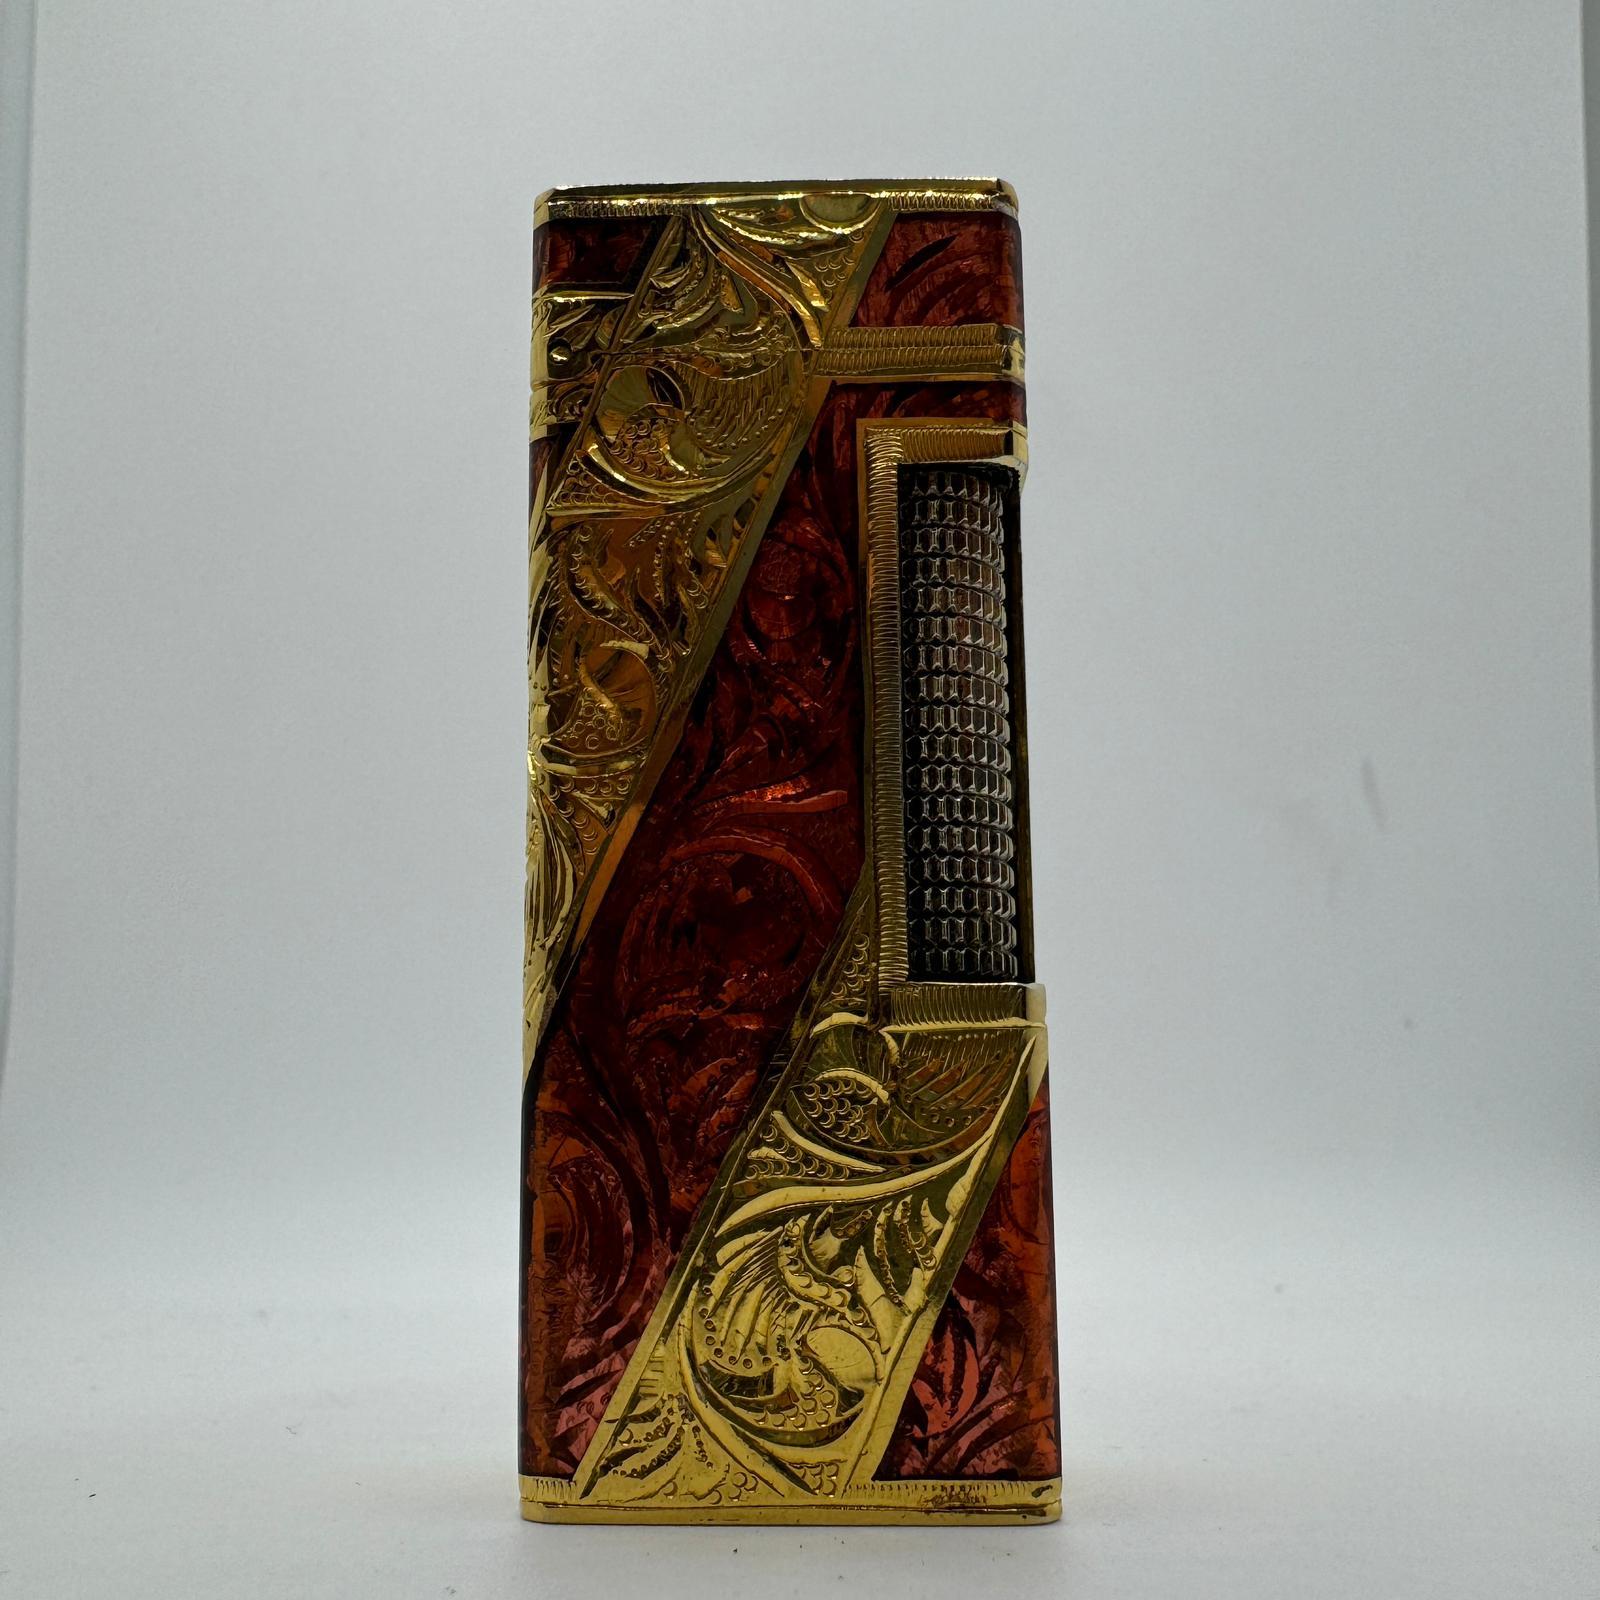 Dunhill Rare Royking Feuerzeug, 18k Vergoldung & Emaille Inlay  Feuerzeug 